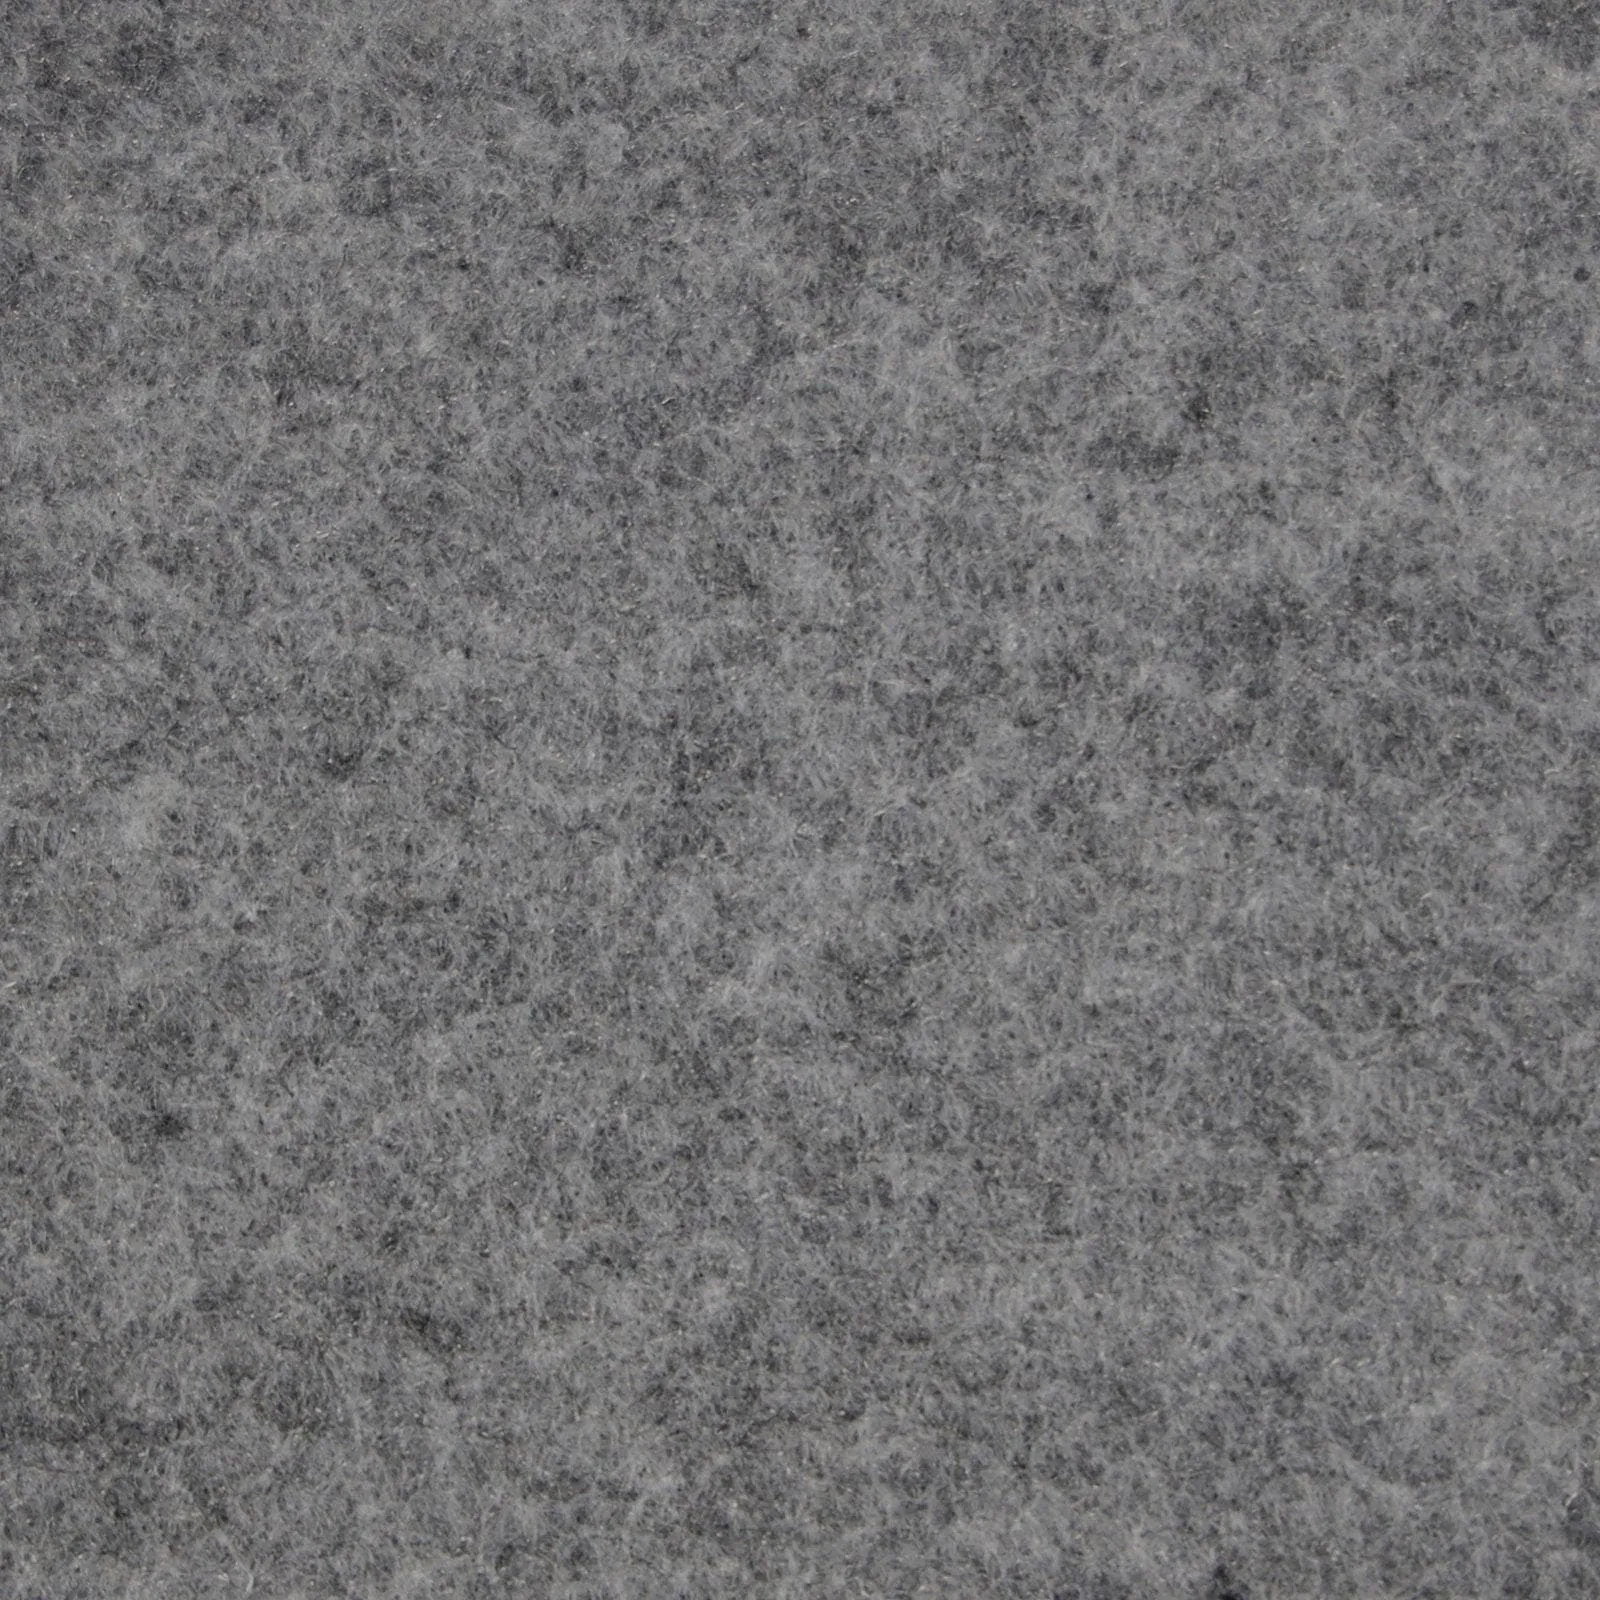 MY HOME Teppichboden "Superflex" Teppiche Nadelfilz, verschiedene Farben & Größen Gr. B/L: 200 cm x 2000 cm, 4 mm, 1 St., grau Teppichboden